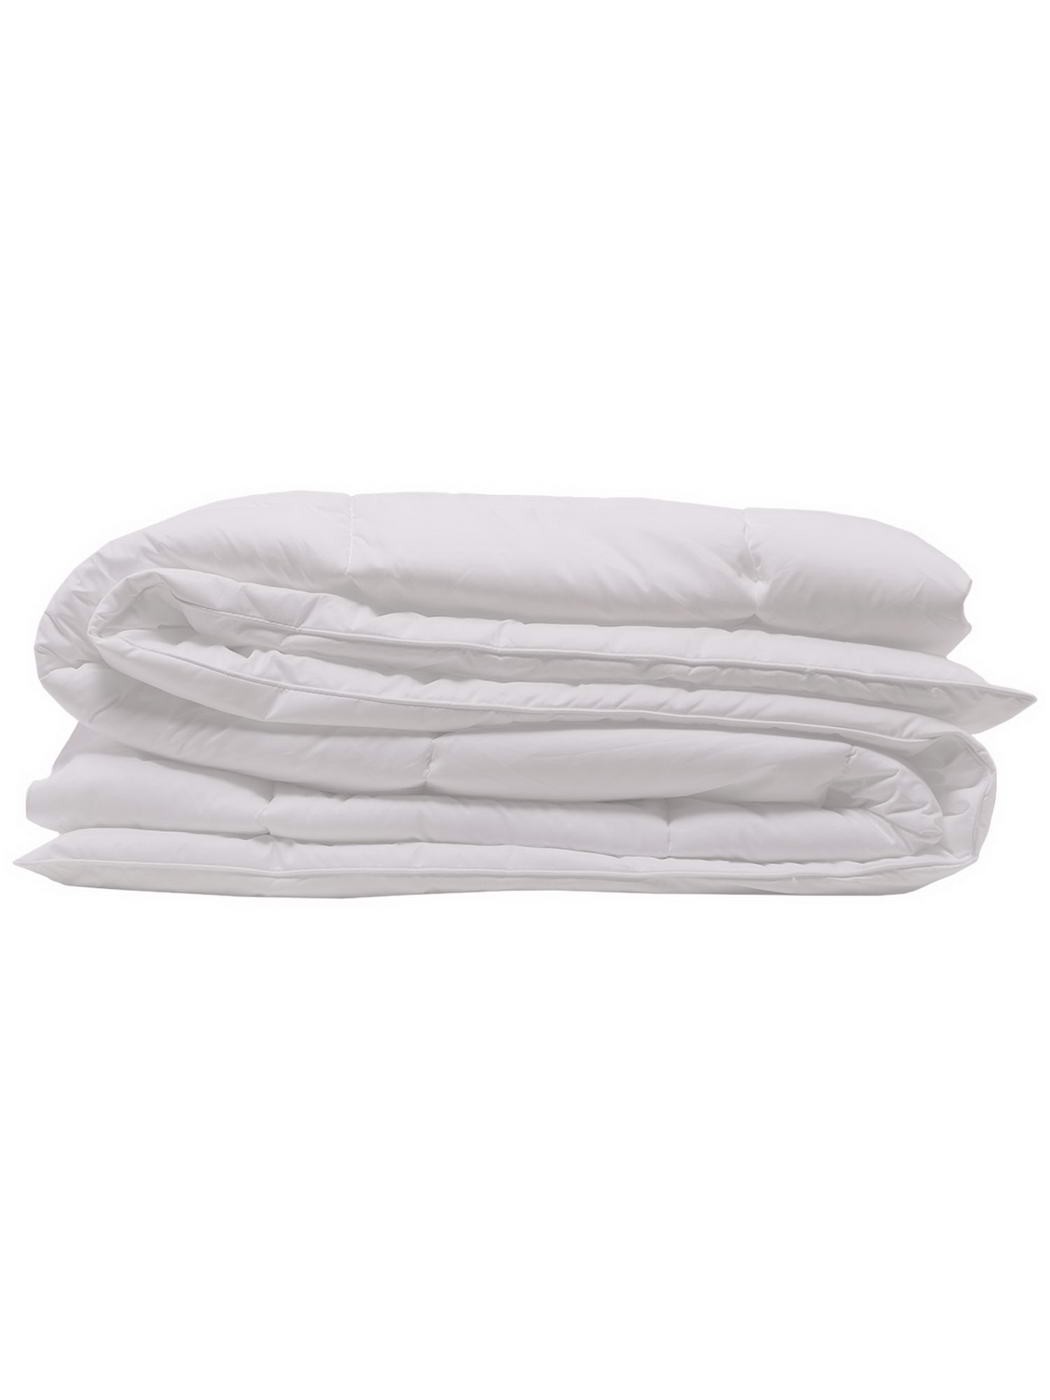 Одеяло всесезонное Evita (195х215 см), размер 195х215 см sofi902217 Одеяло всесезонное Evita (195х215 см) - фото 1